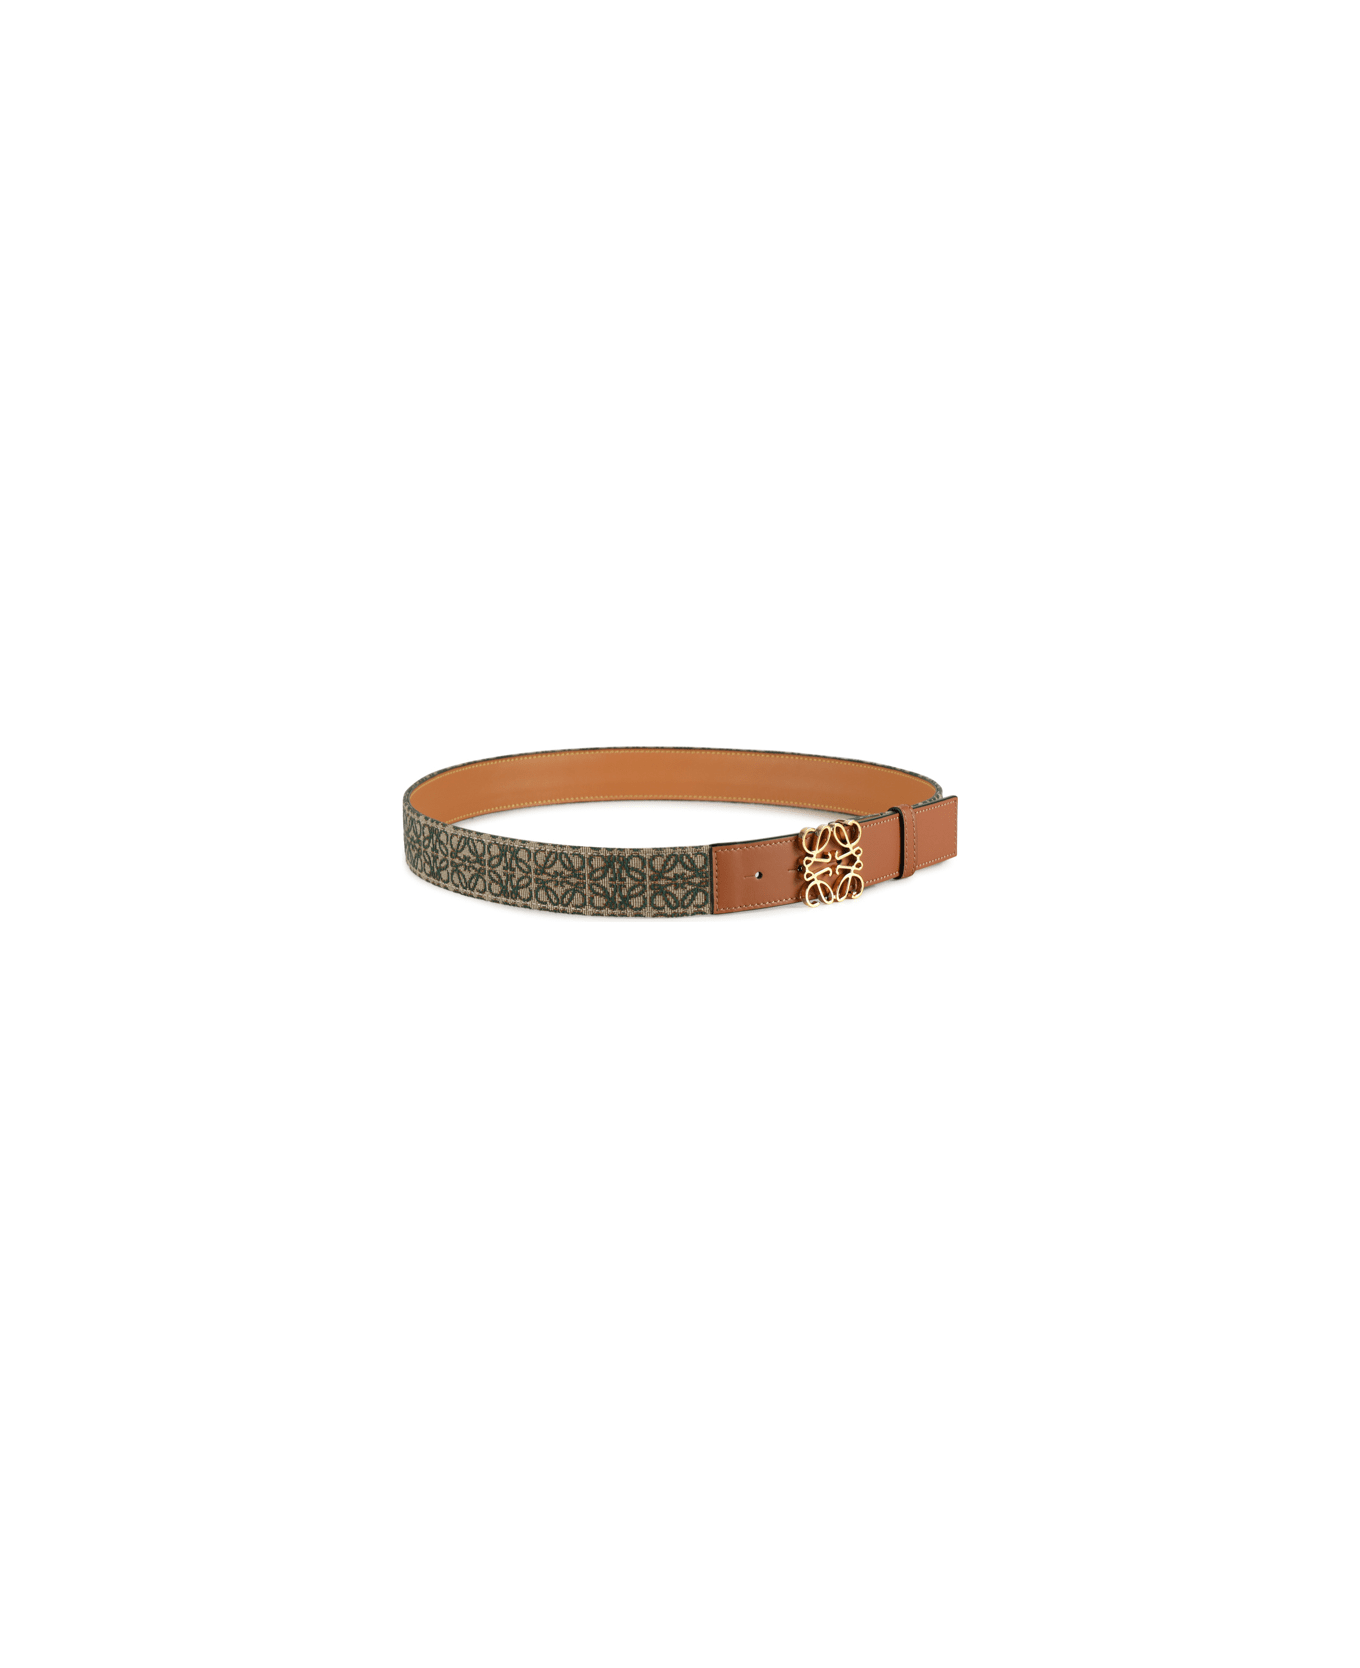 Loewe Anagram Belt In Leather And Jacquard - Khaki green/tan/gold